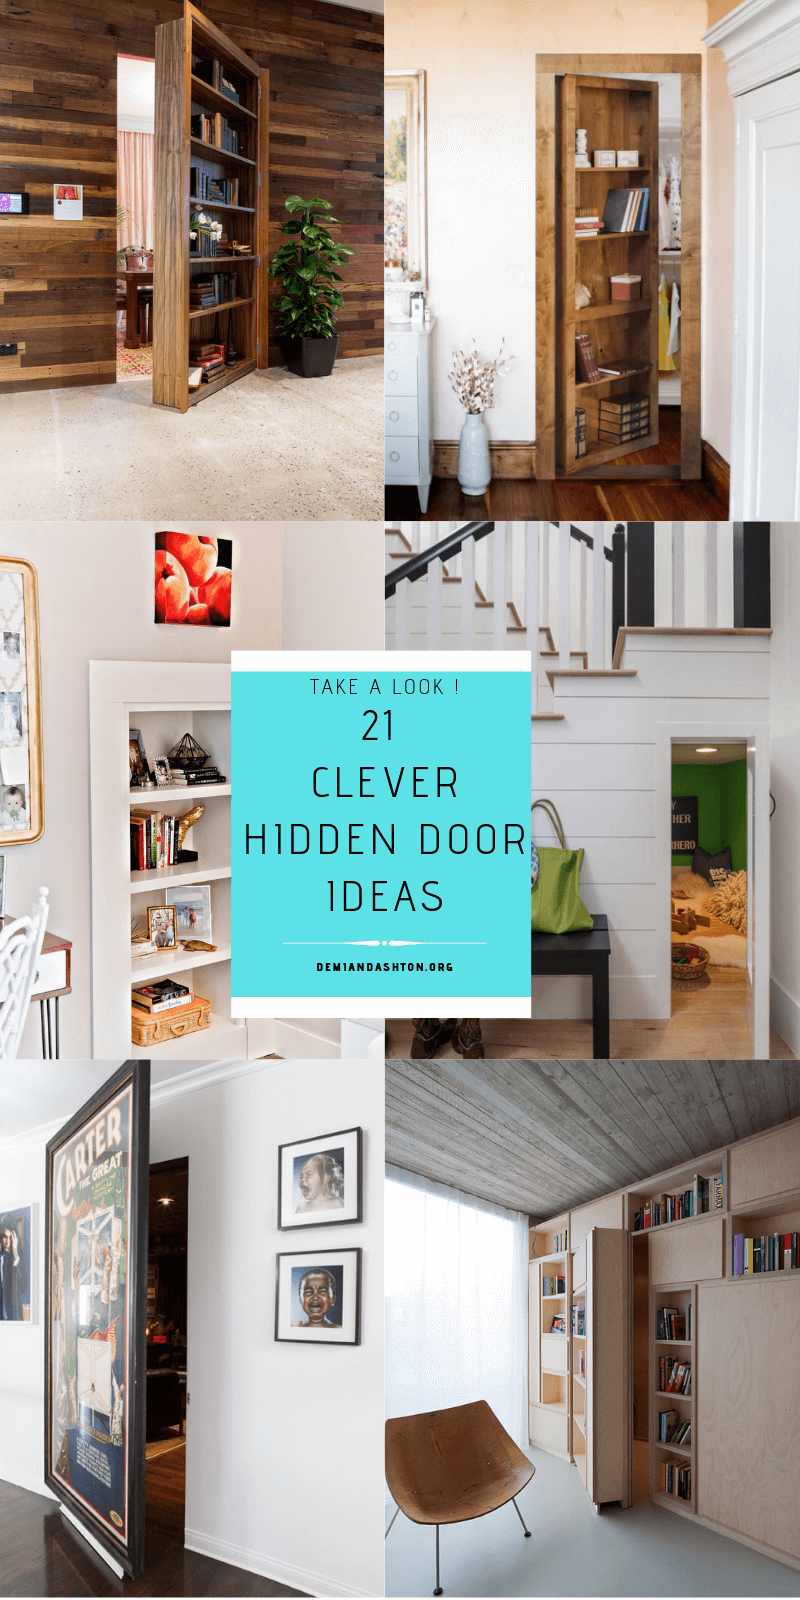 21 Clever Hidden Door Ideas To Make Your Home More Fun David On Blog